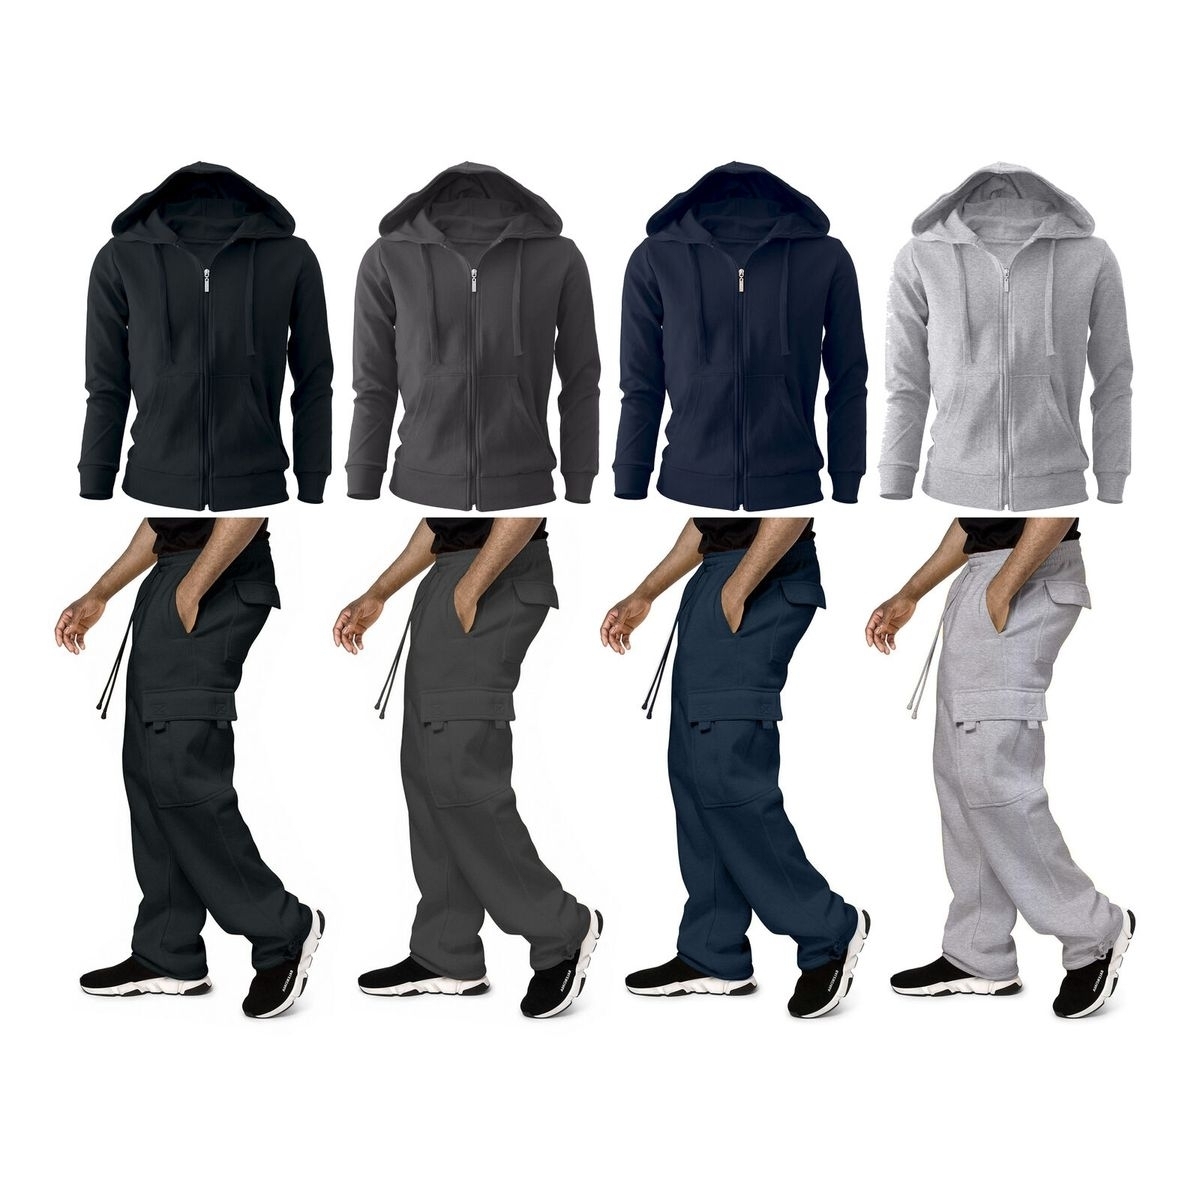 Men's Big & Tall Winter Warm Athletic Active Cozy Fleece Lined Multi-Pocket Full Zip Up Cargo Tracksuit - Navy, Medium